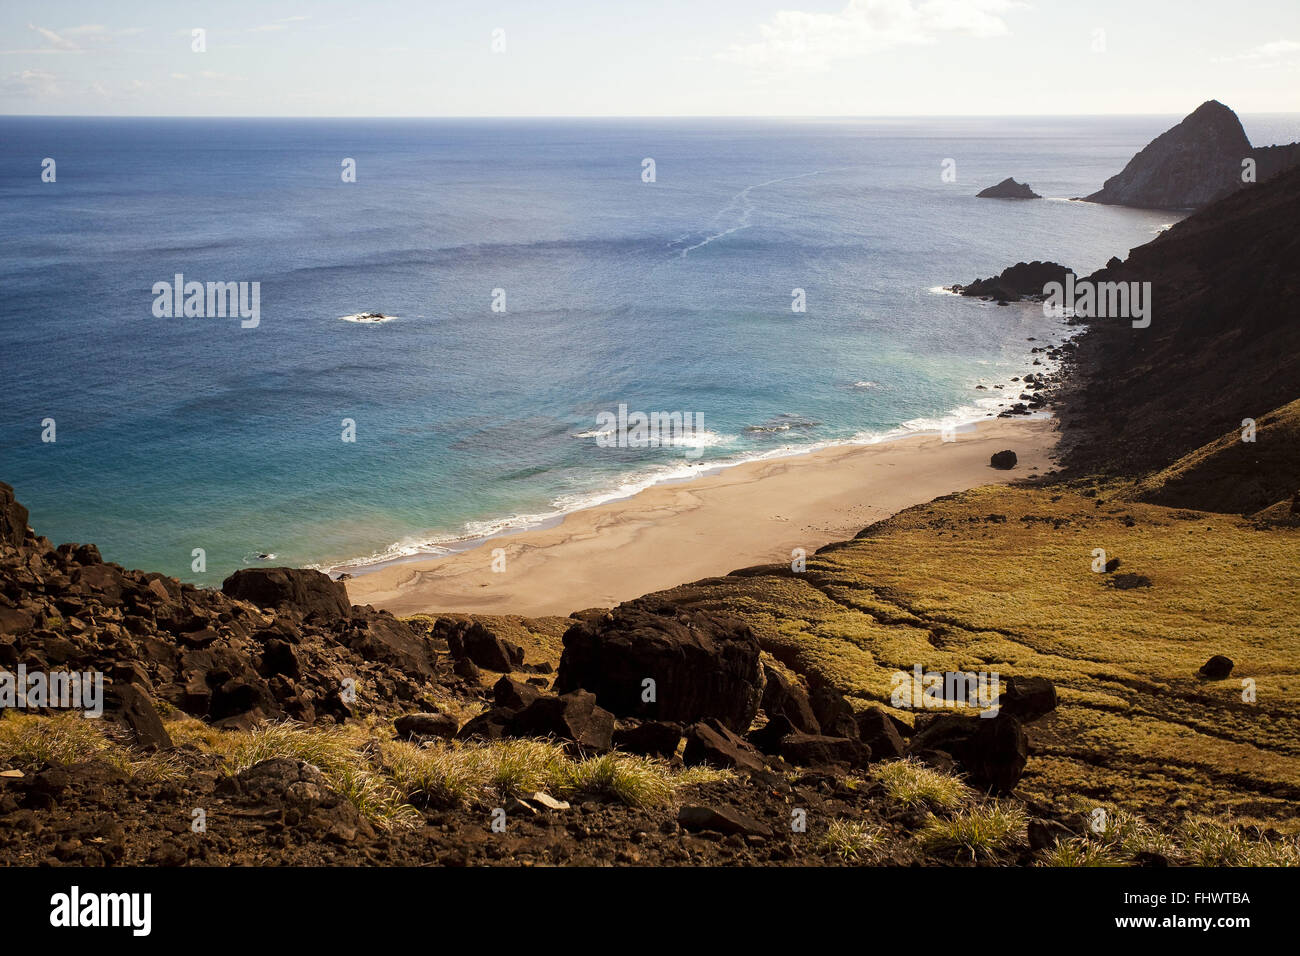 Ilha da Trindade with Atlantic Ocean in the background Stock Photo